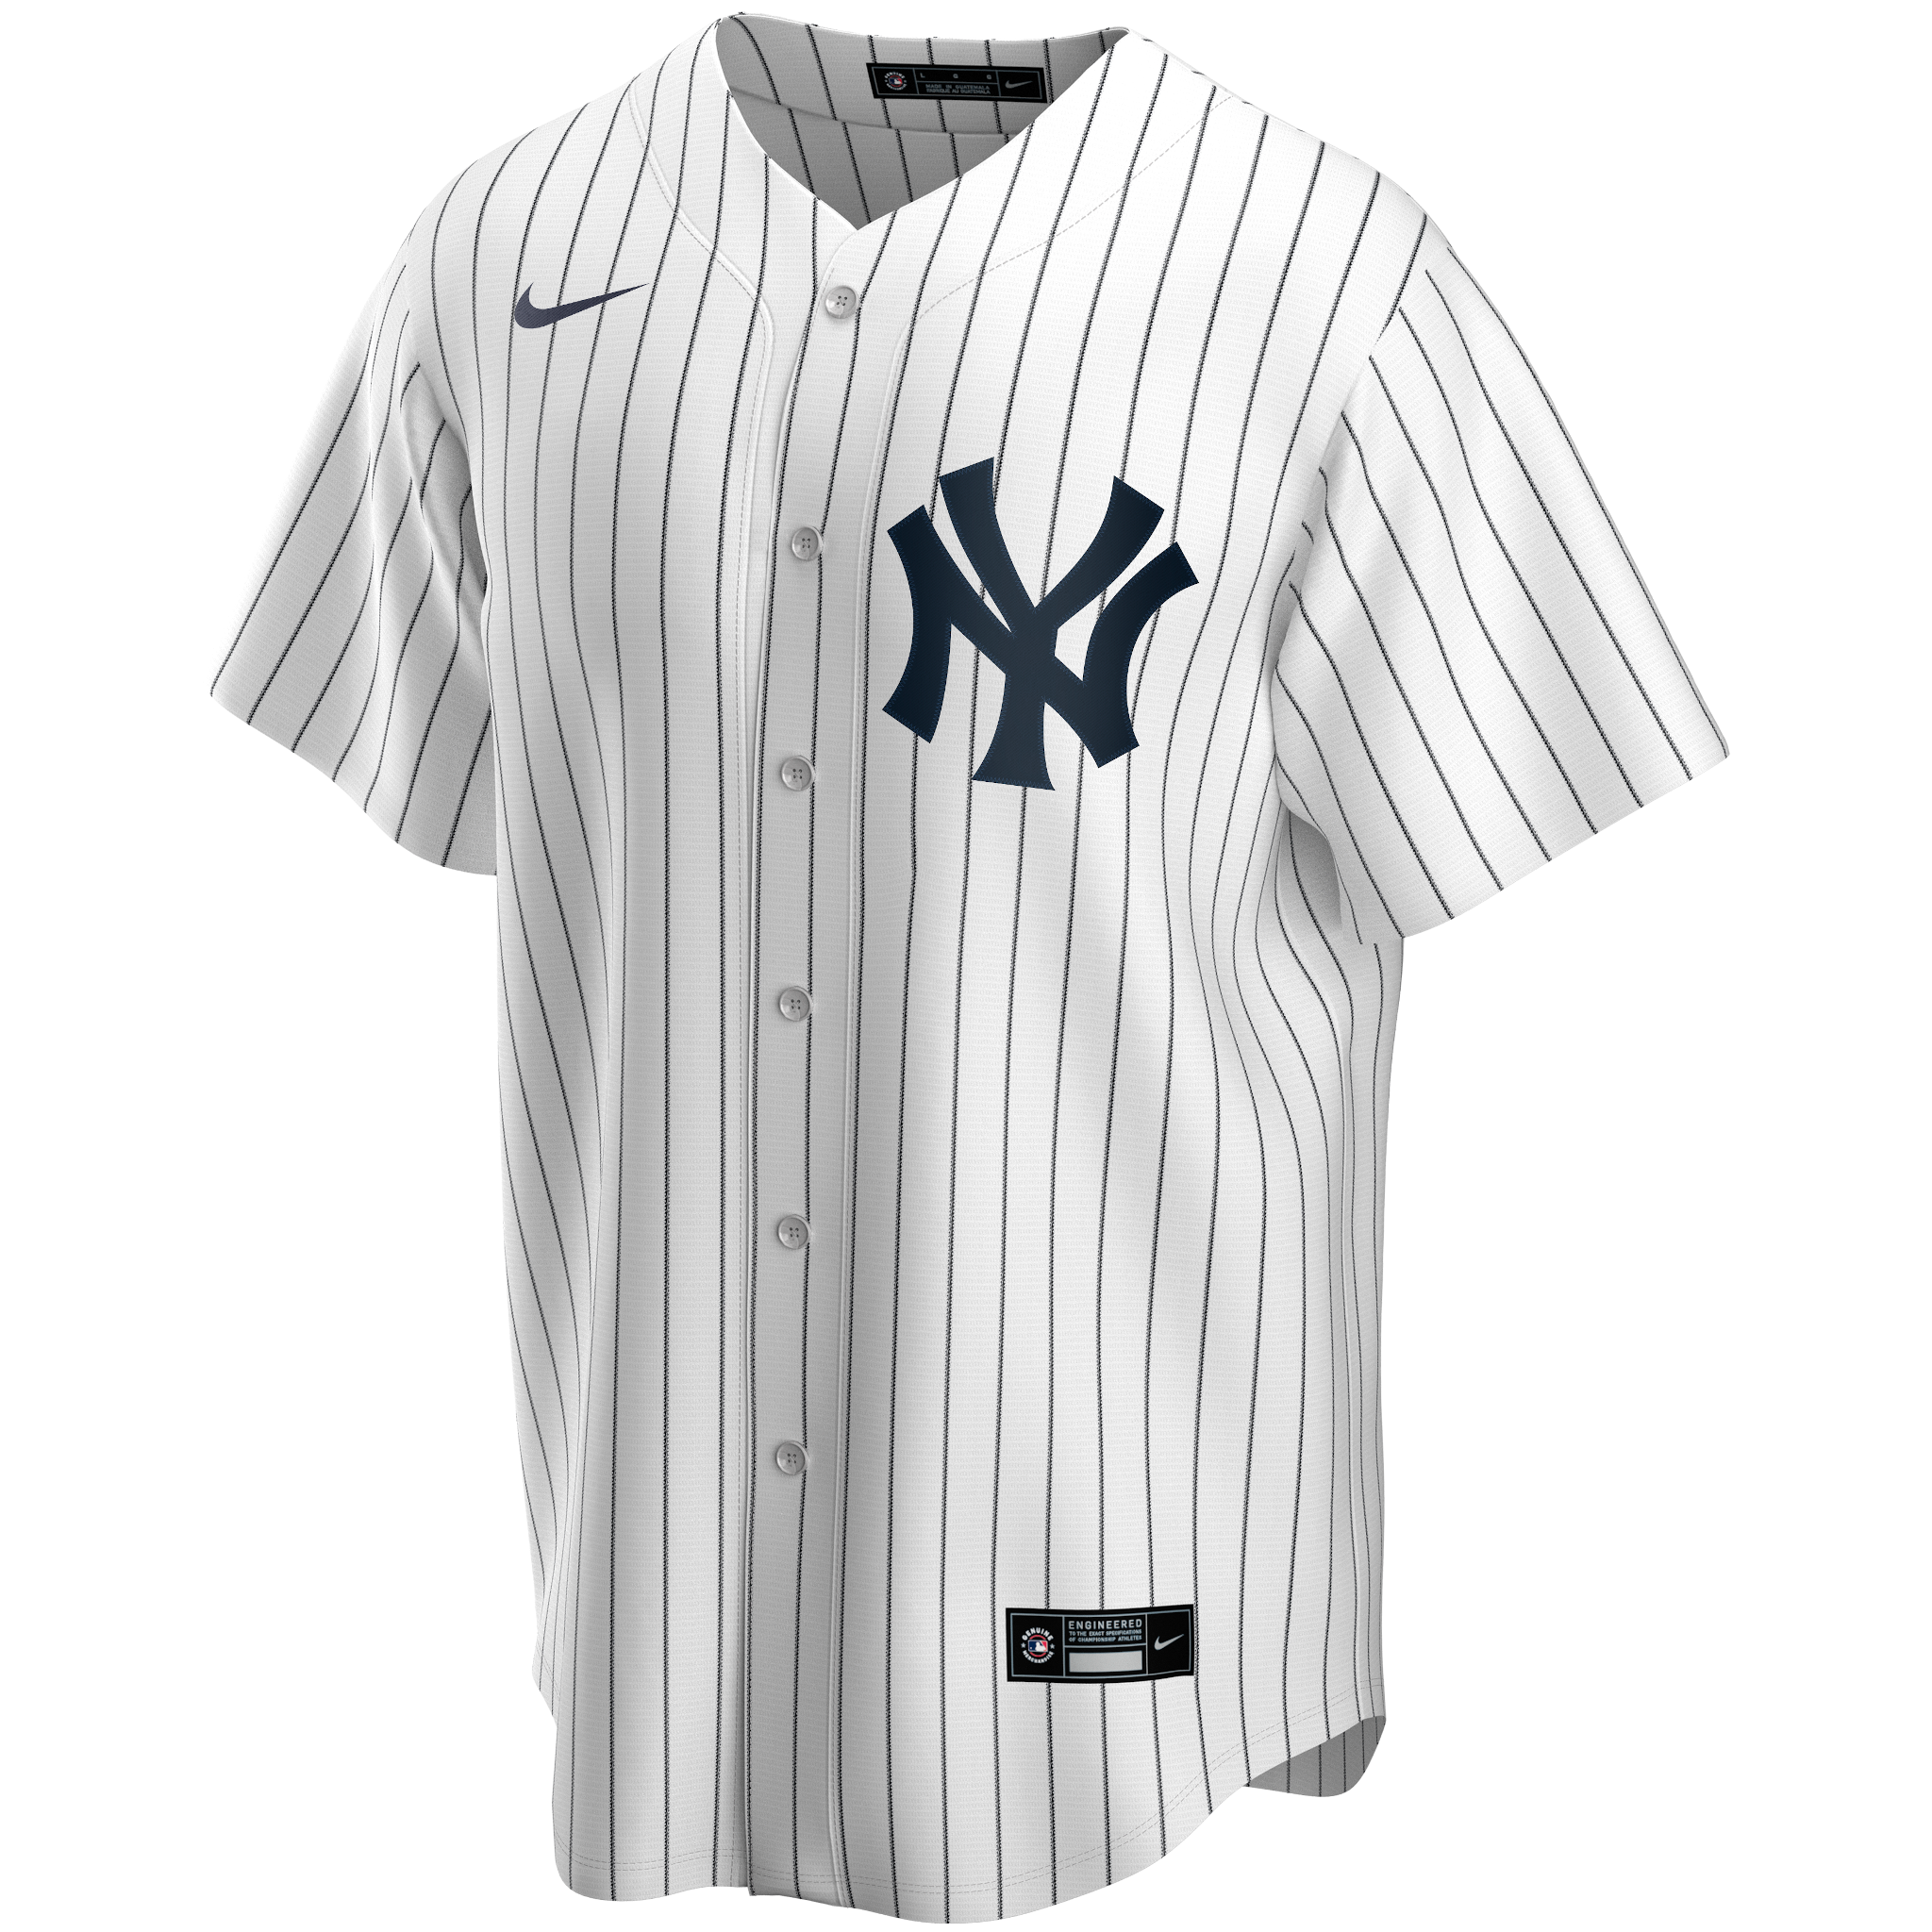 Profile Men's Gerrit Cole White/Navy New York Yankees Big & Tall Replica Player Jersey